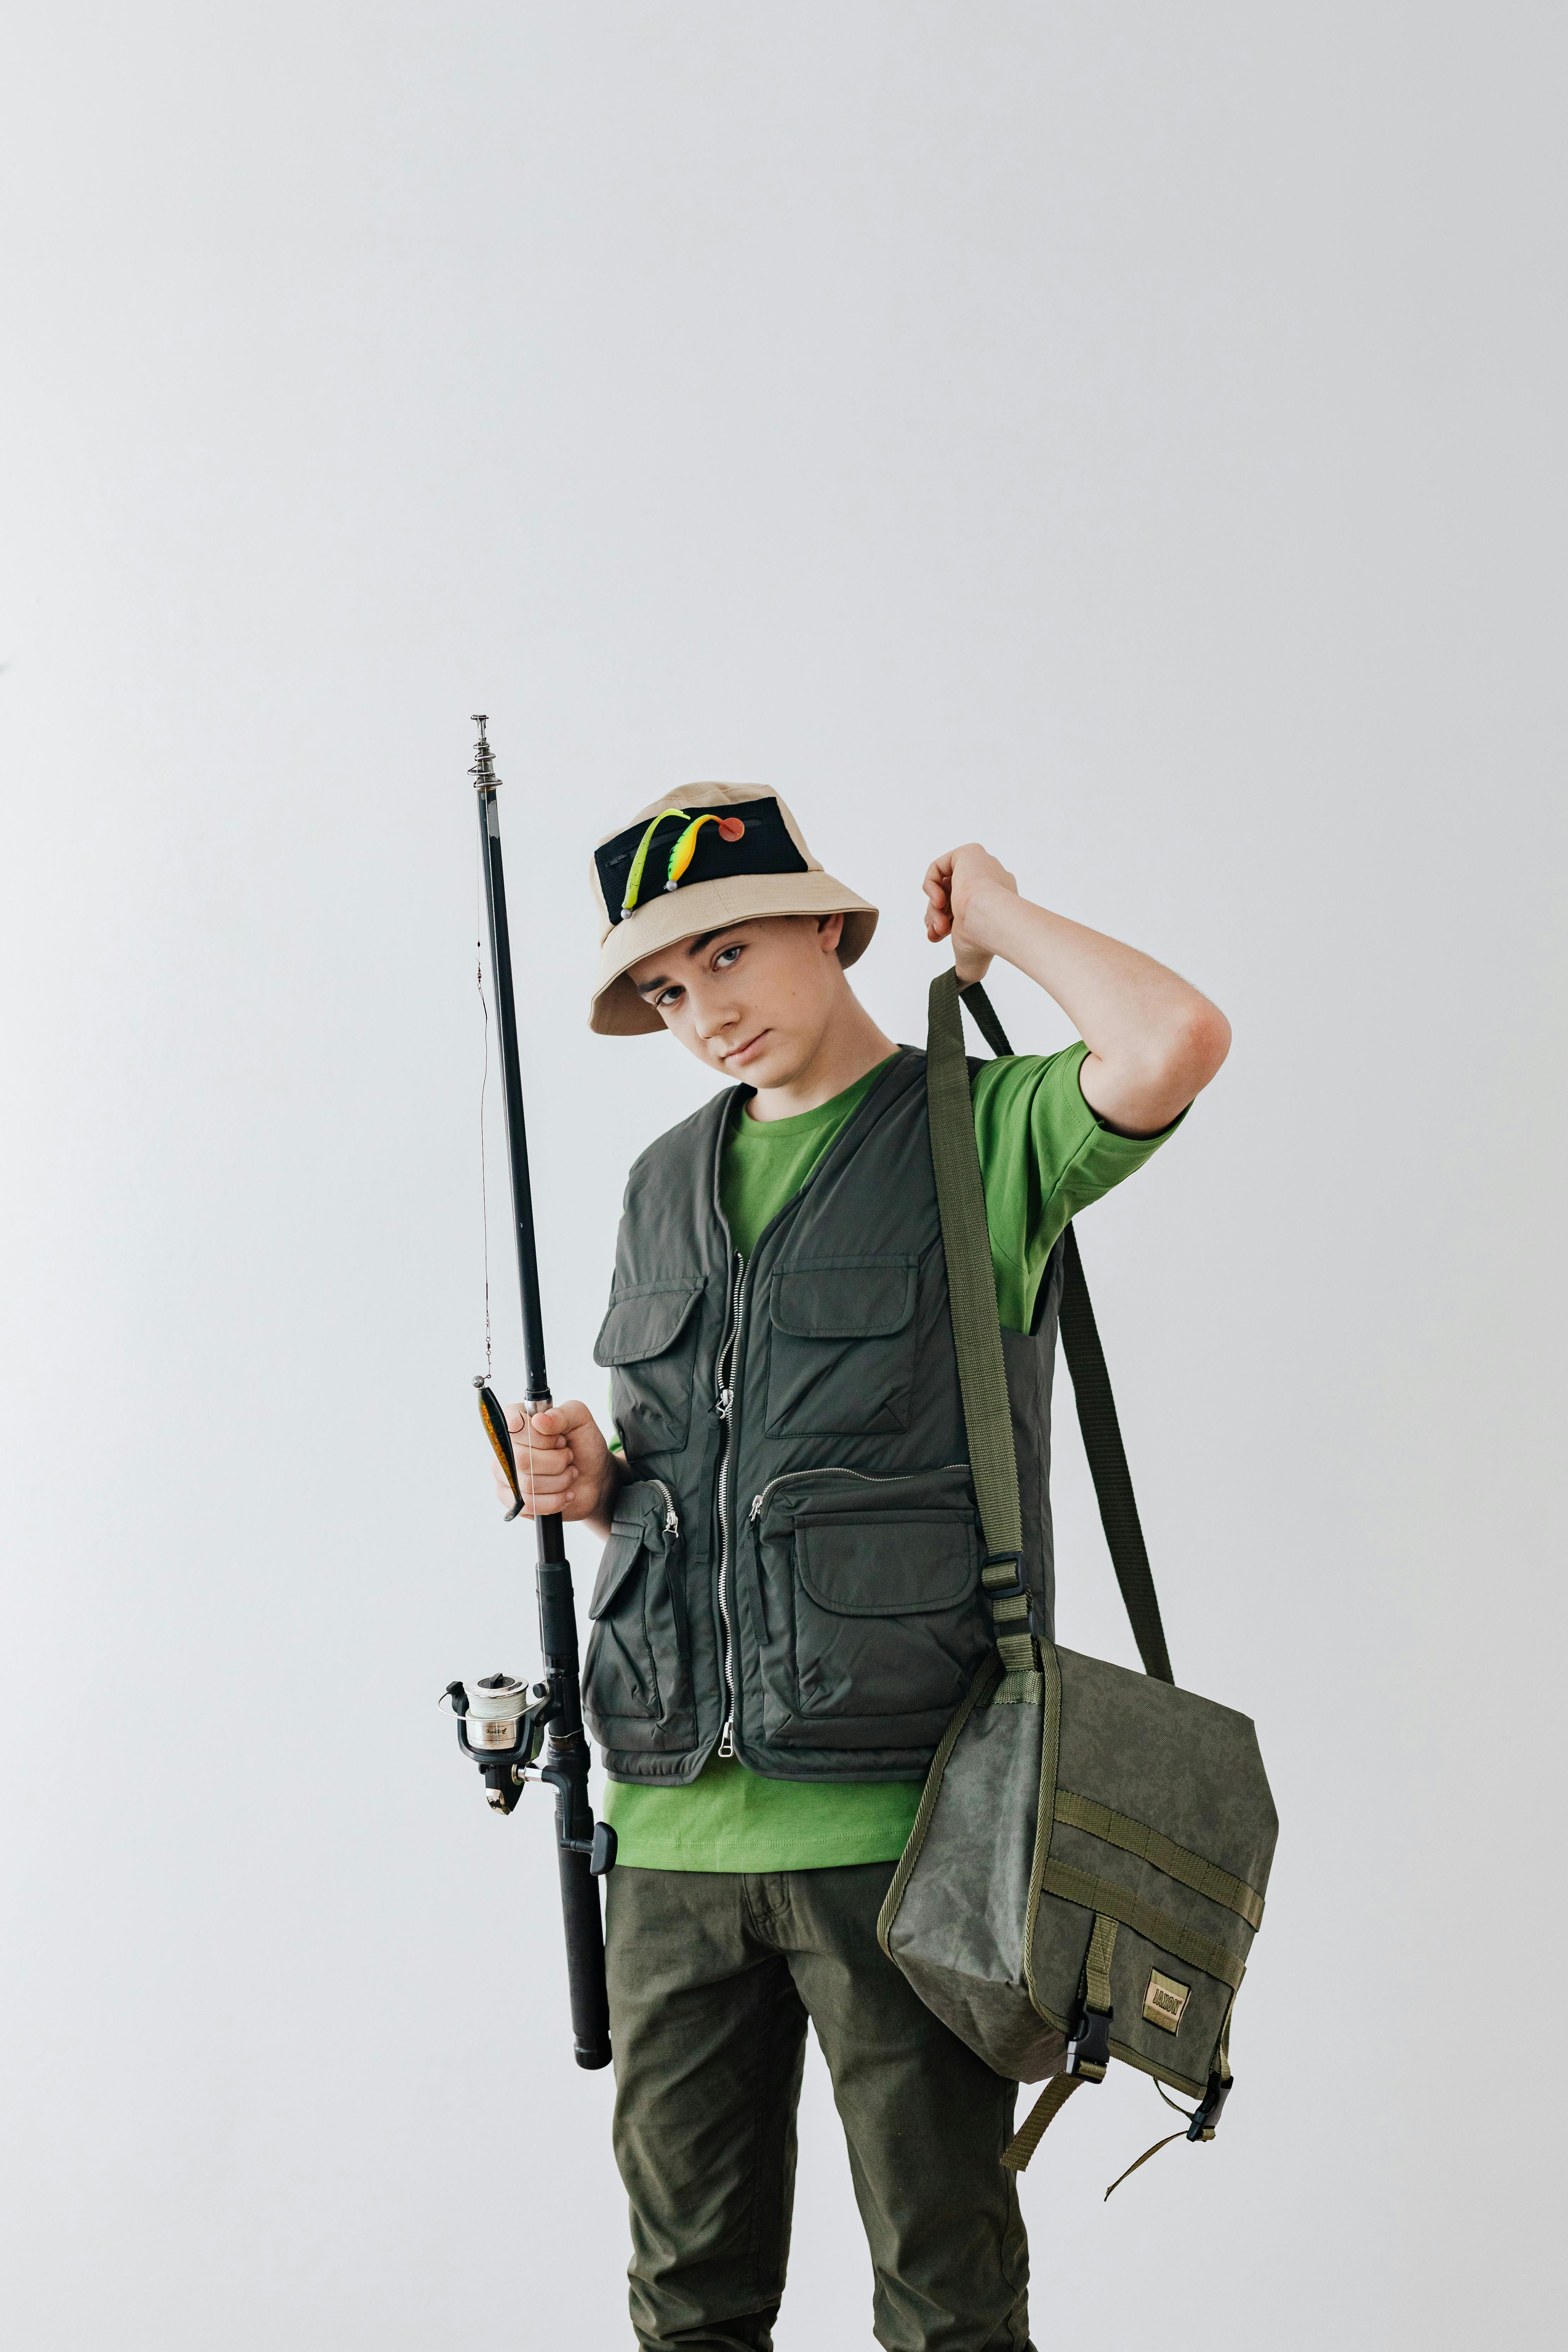 A boy holding a fishing rod | Source: Pexels